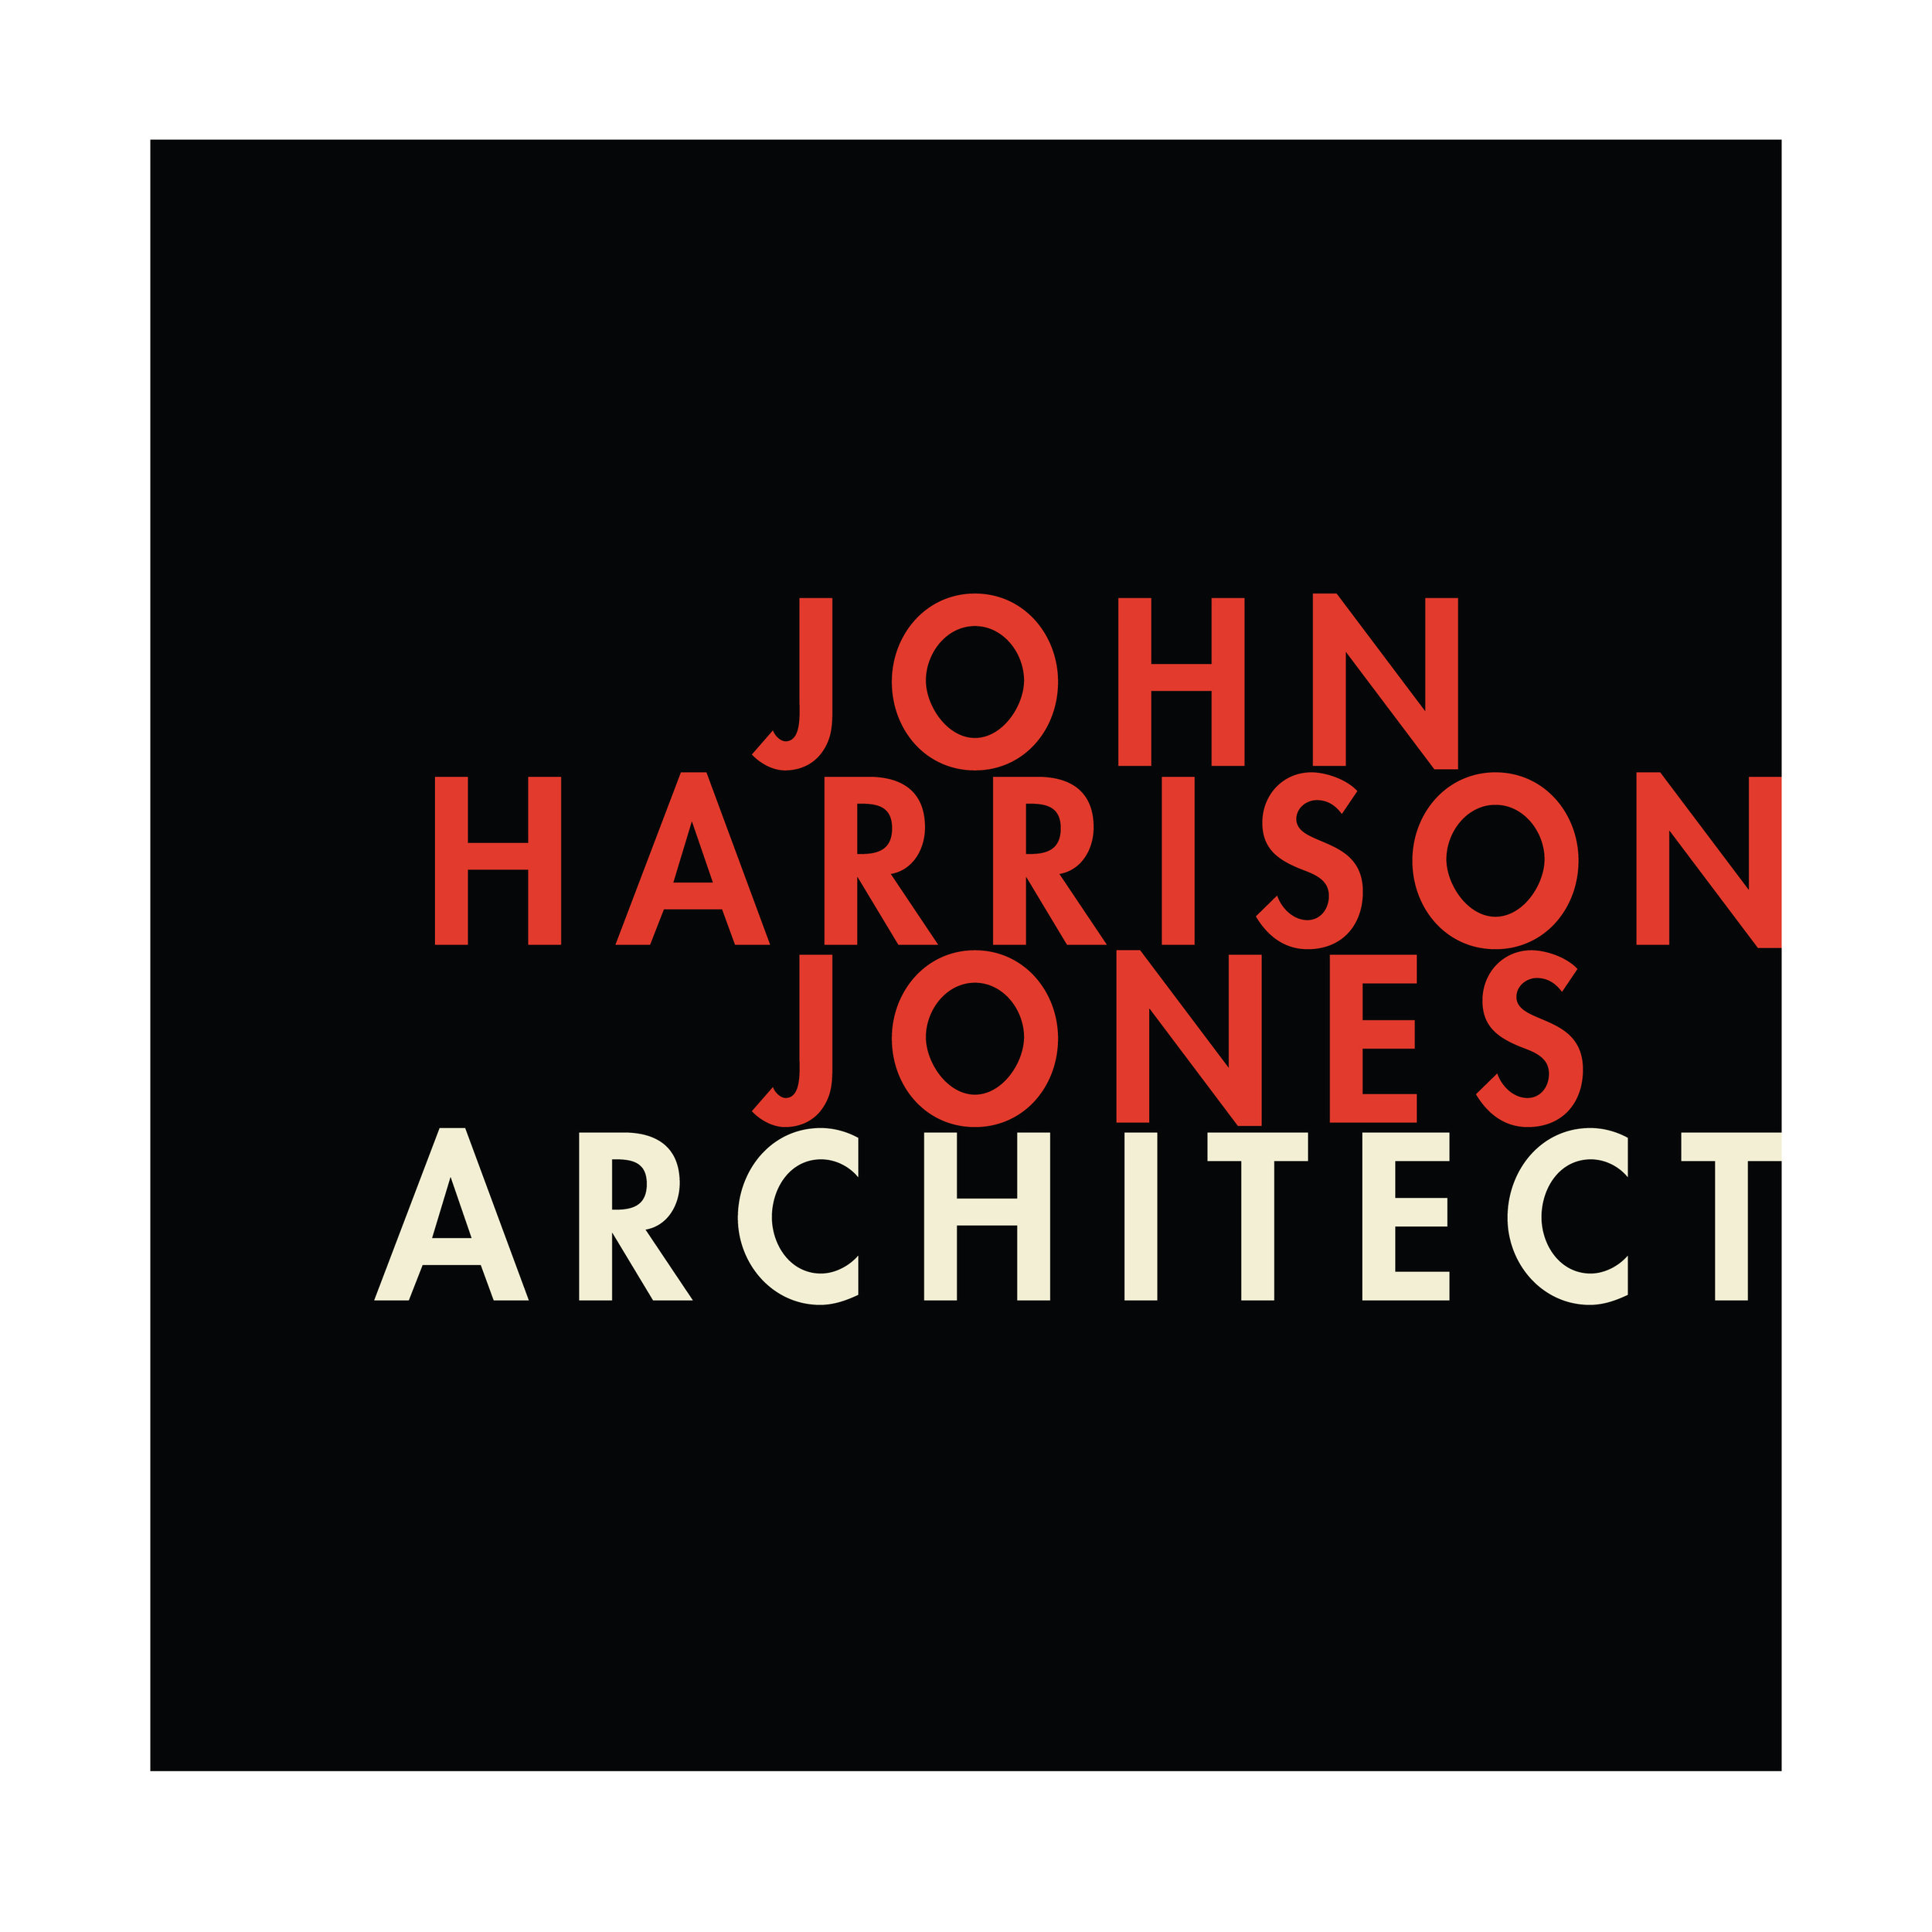  John Harrison Jones Architect  Branding creative and design by Chuck Mitchell 